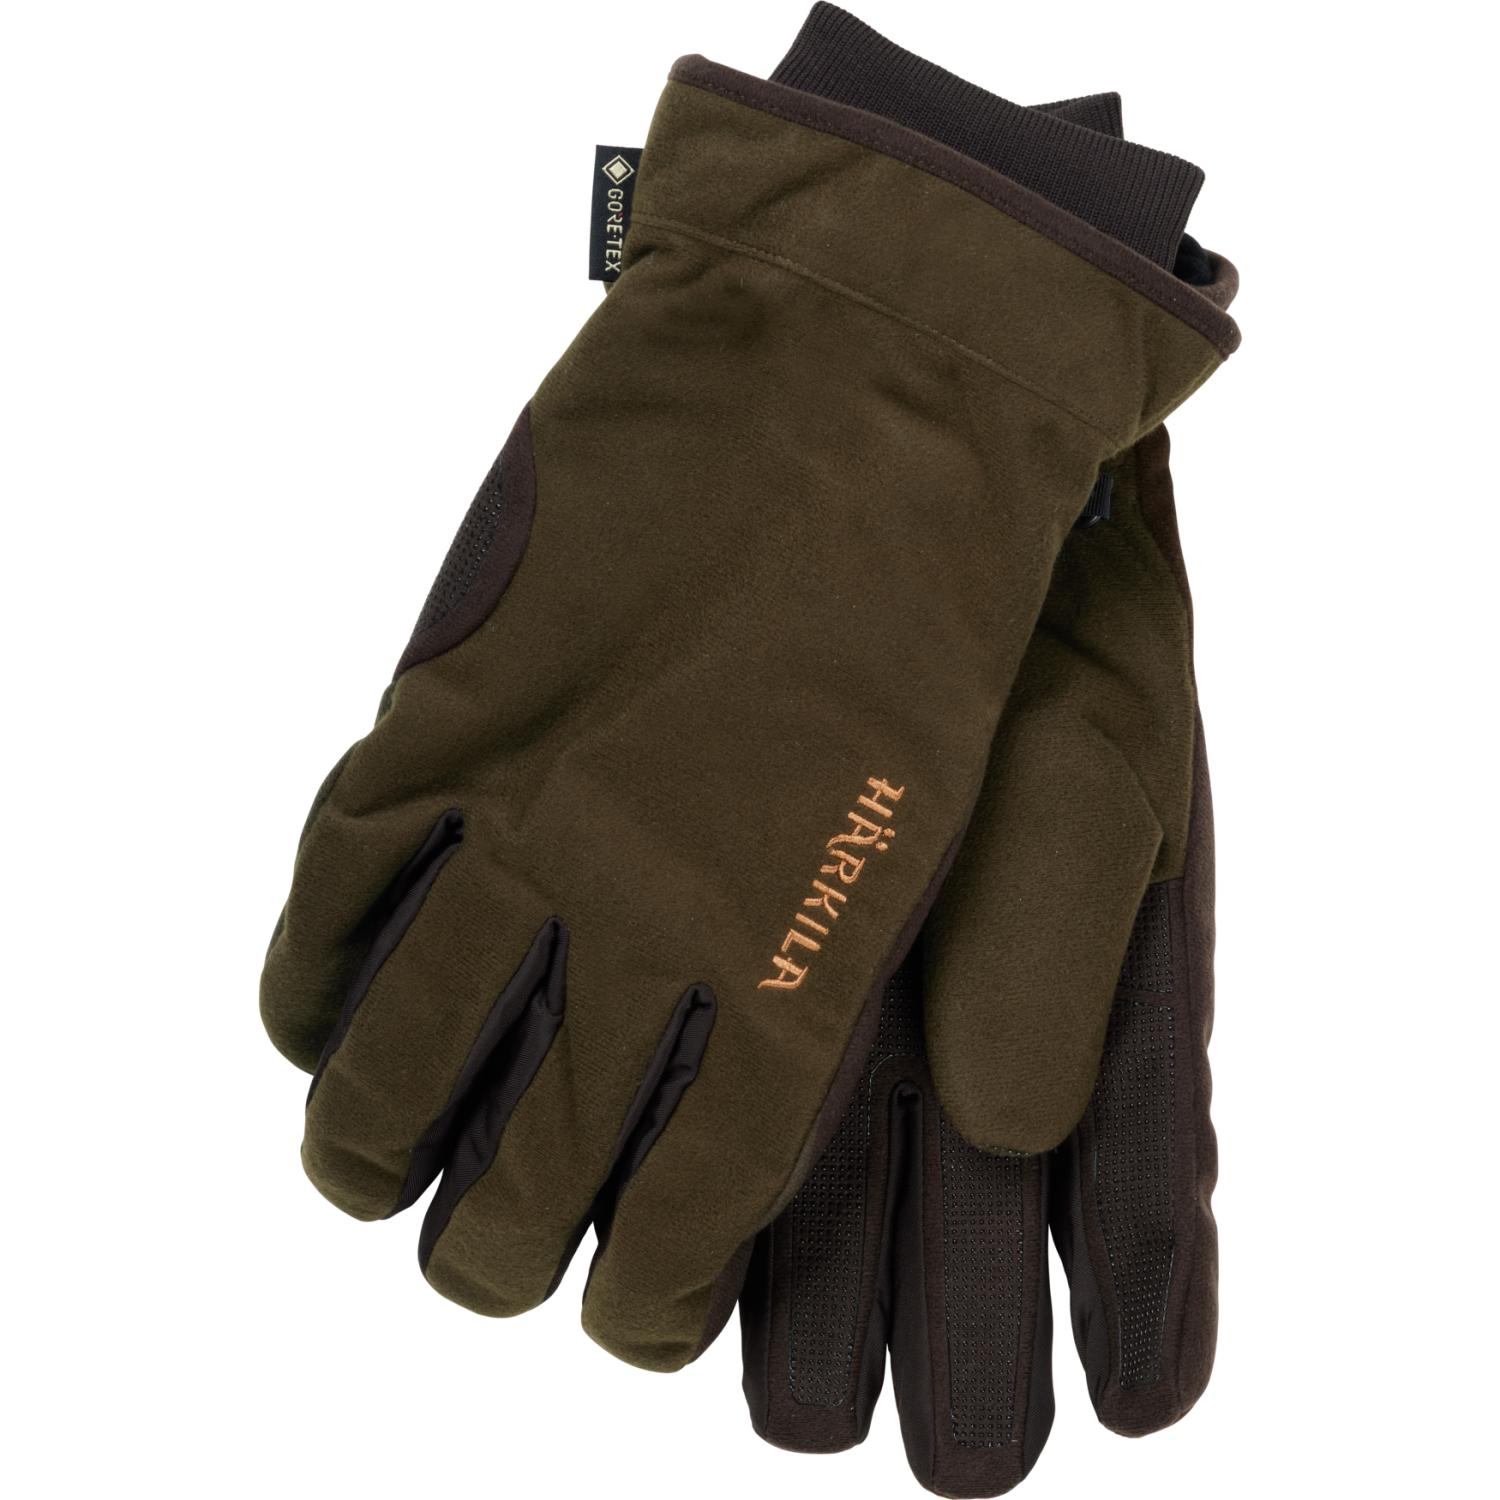 Harkila Core GTX gloves